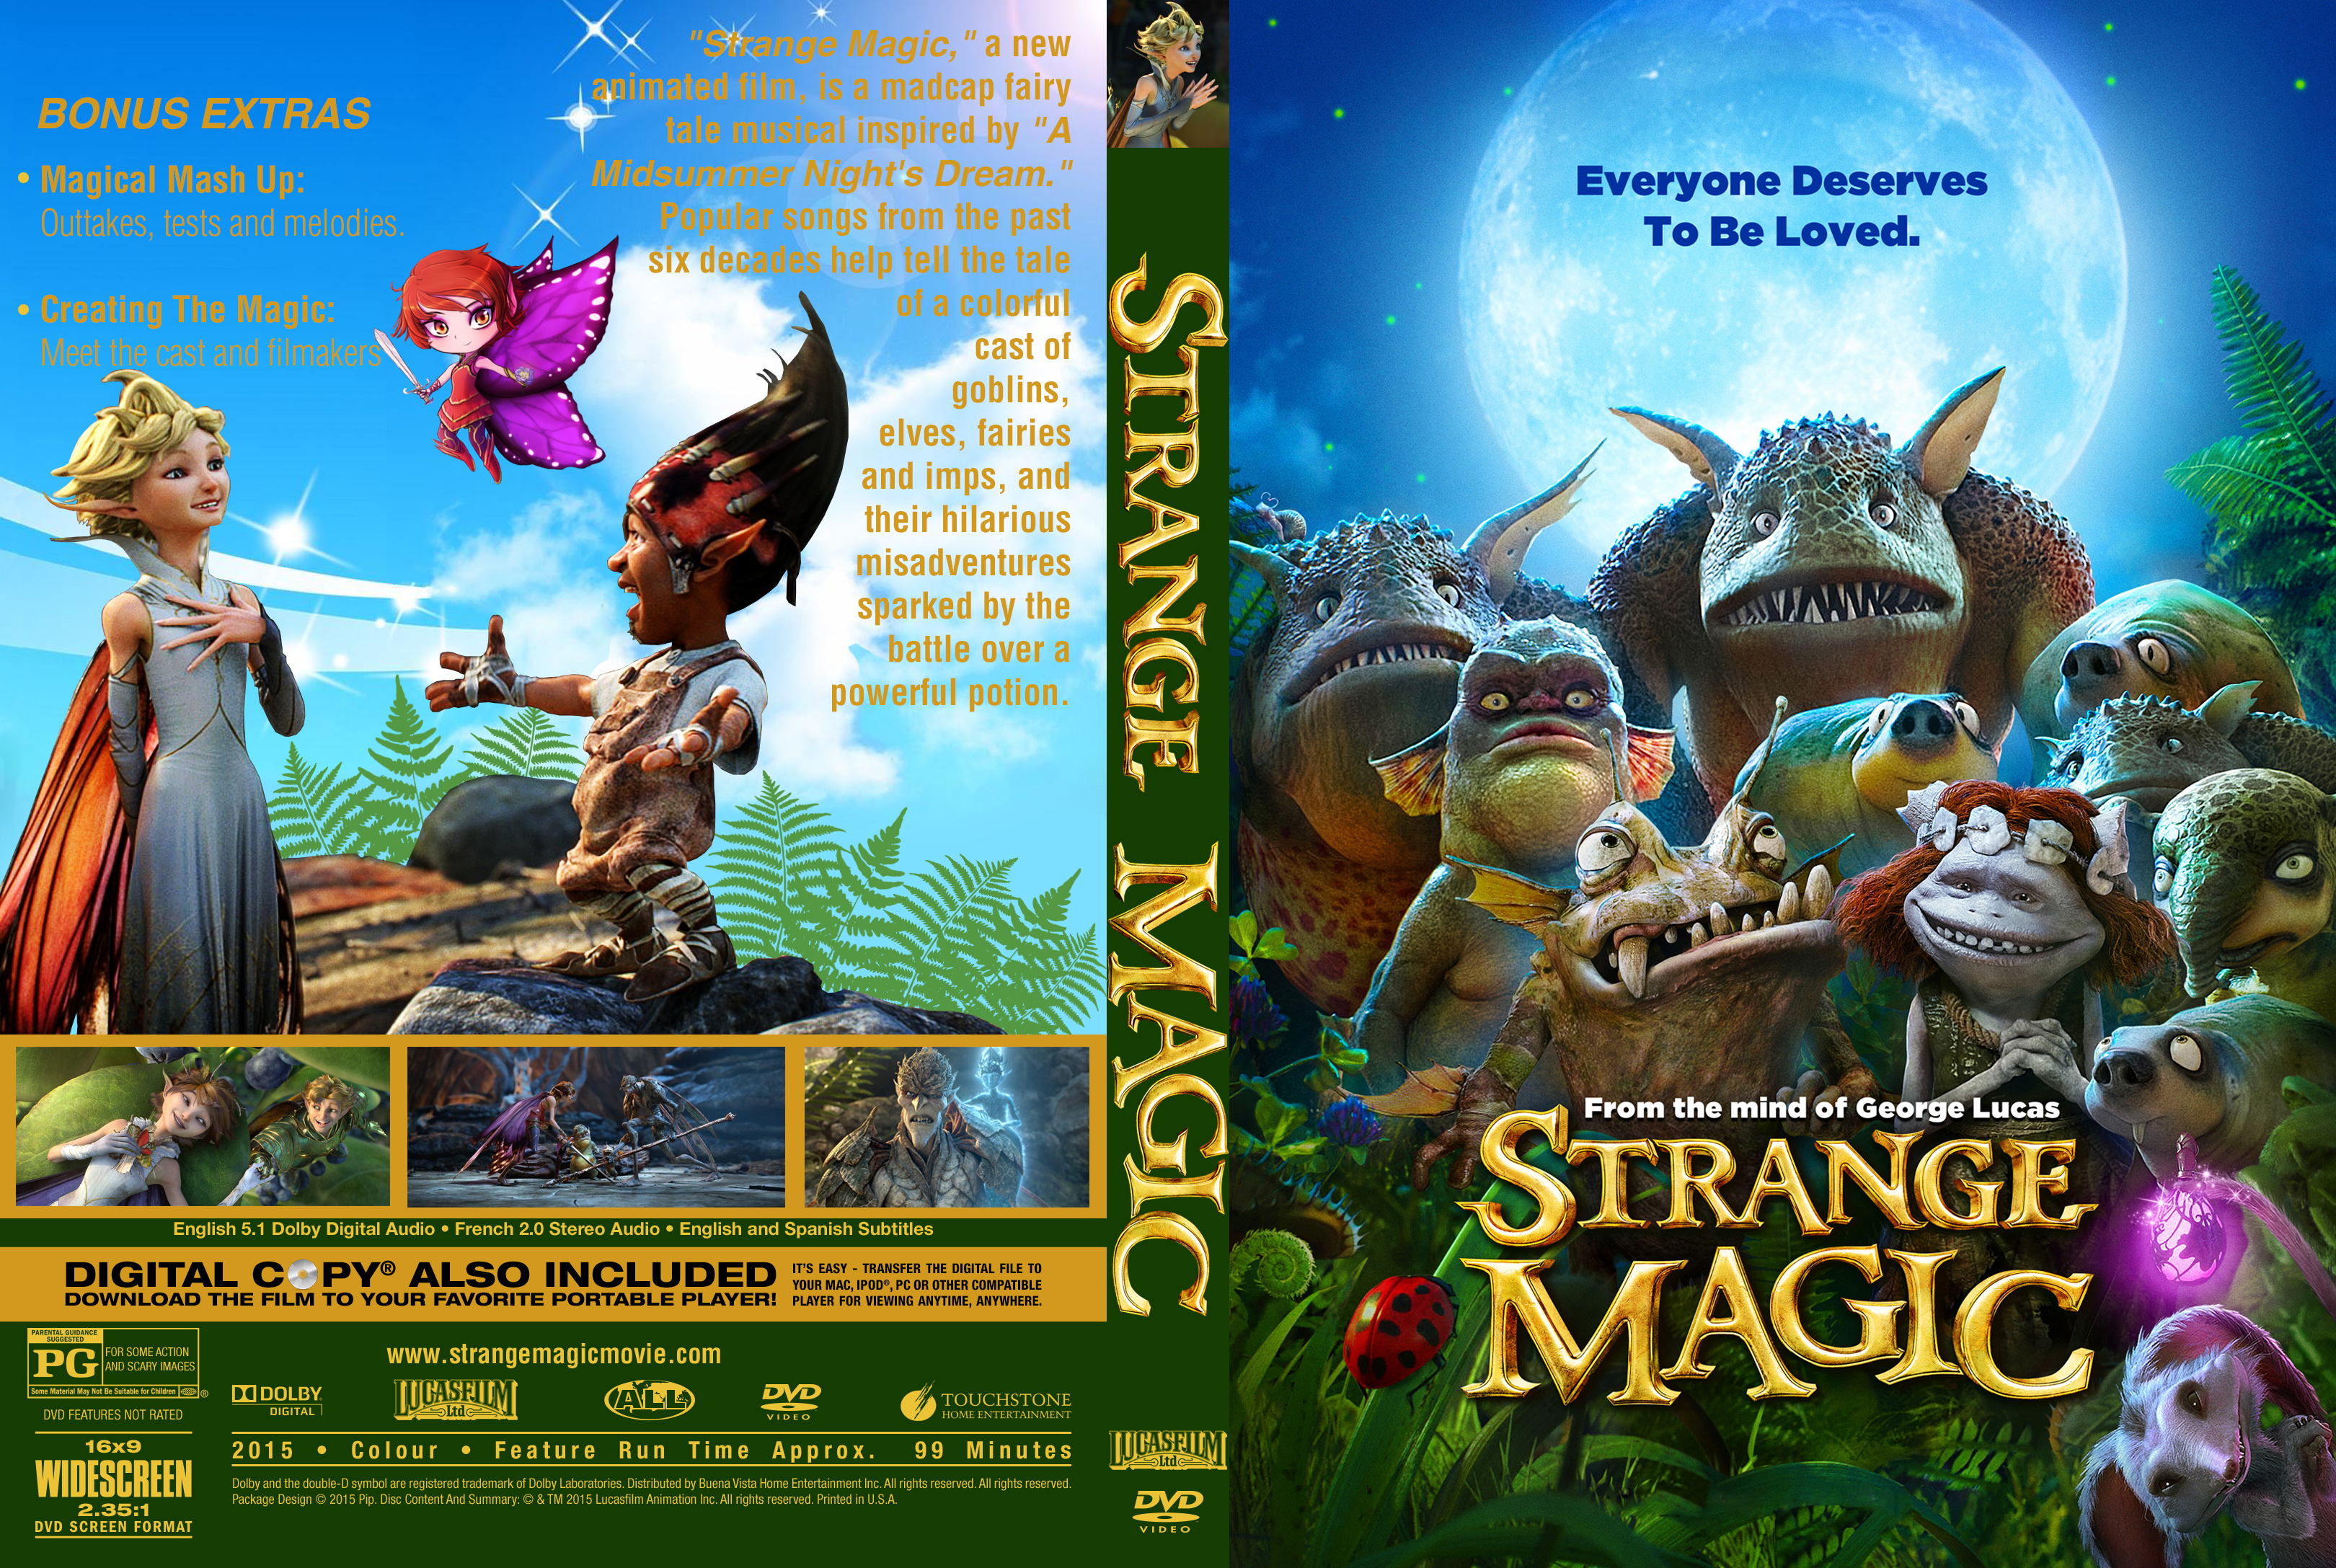 movie magic 6.1 mac